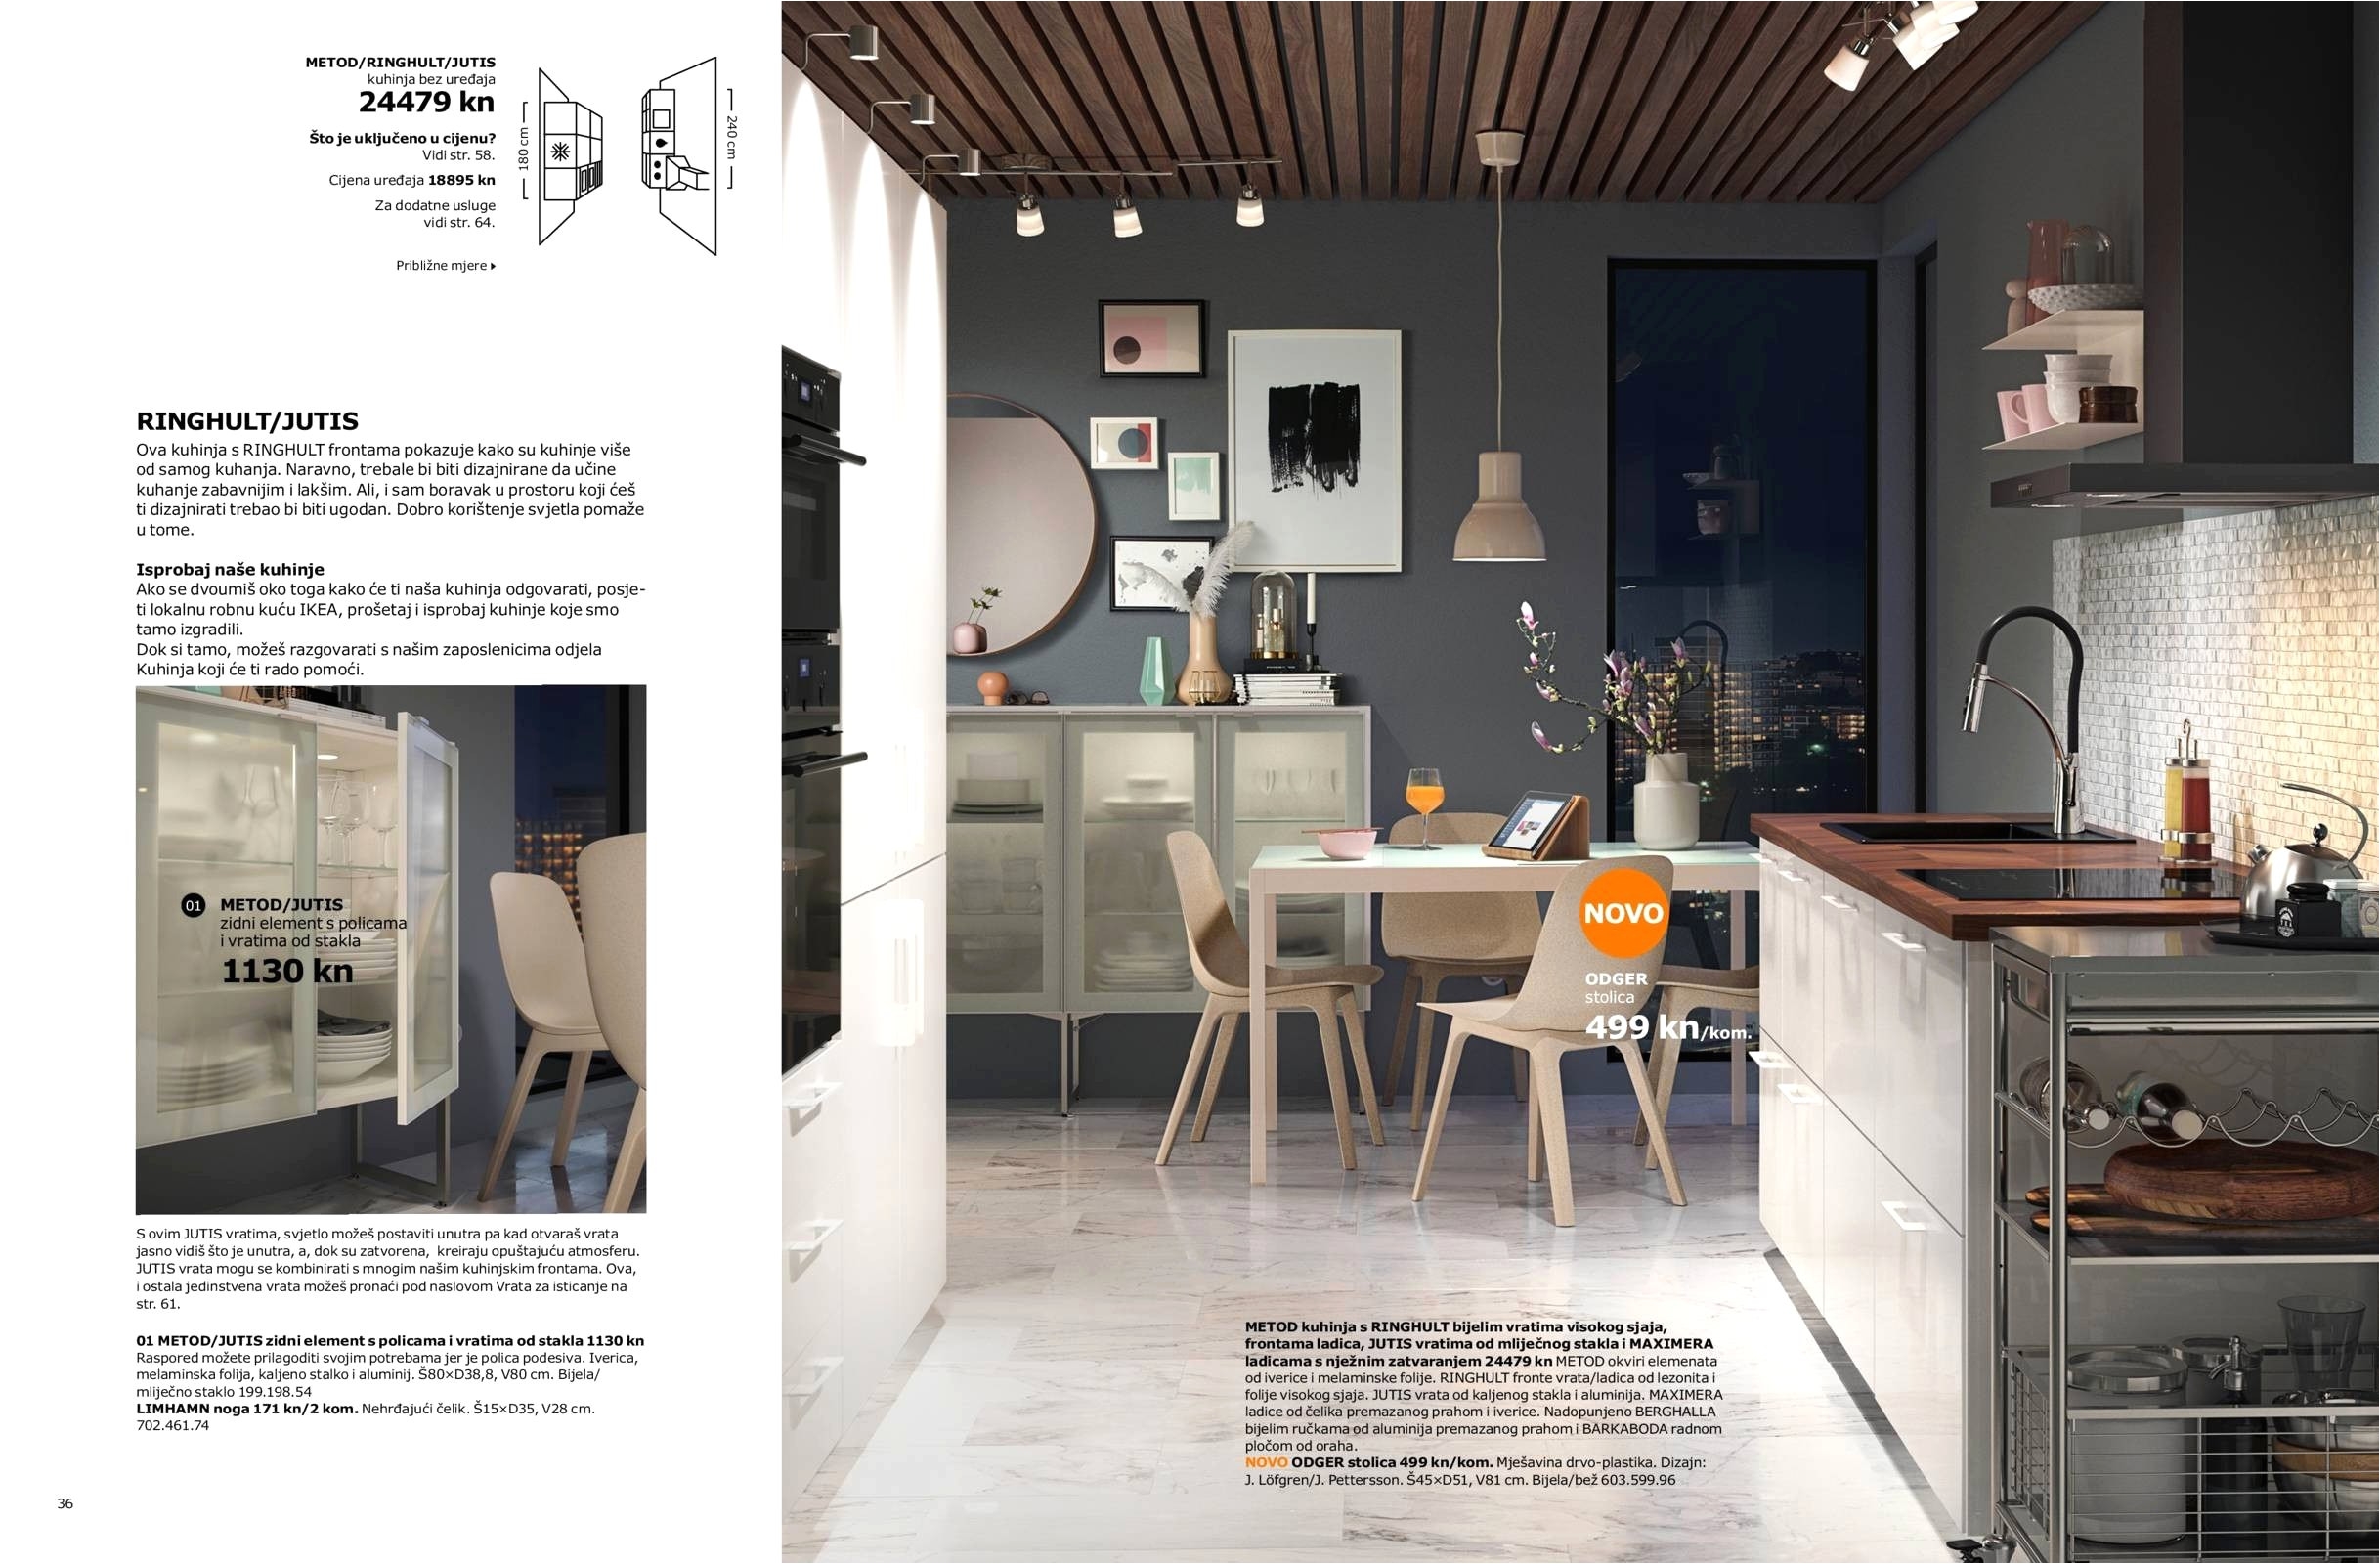 Glass Wall Kitchen Cabinets Stunning 15 Luxury Ikea Kitchen Wall Cabinets With Glass Doors Pics